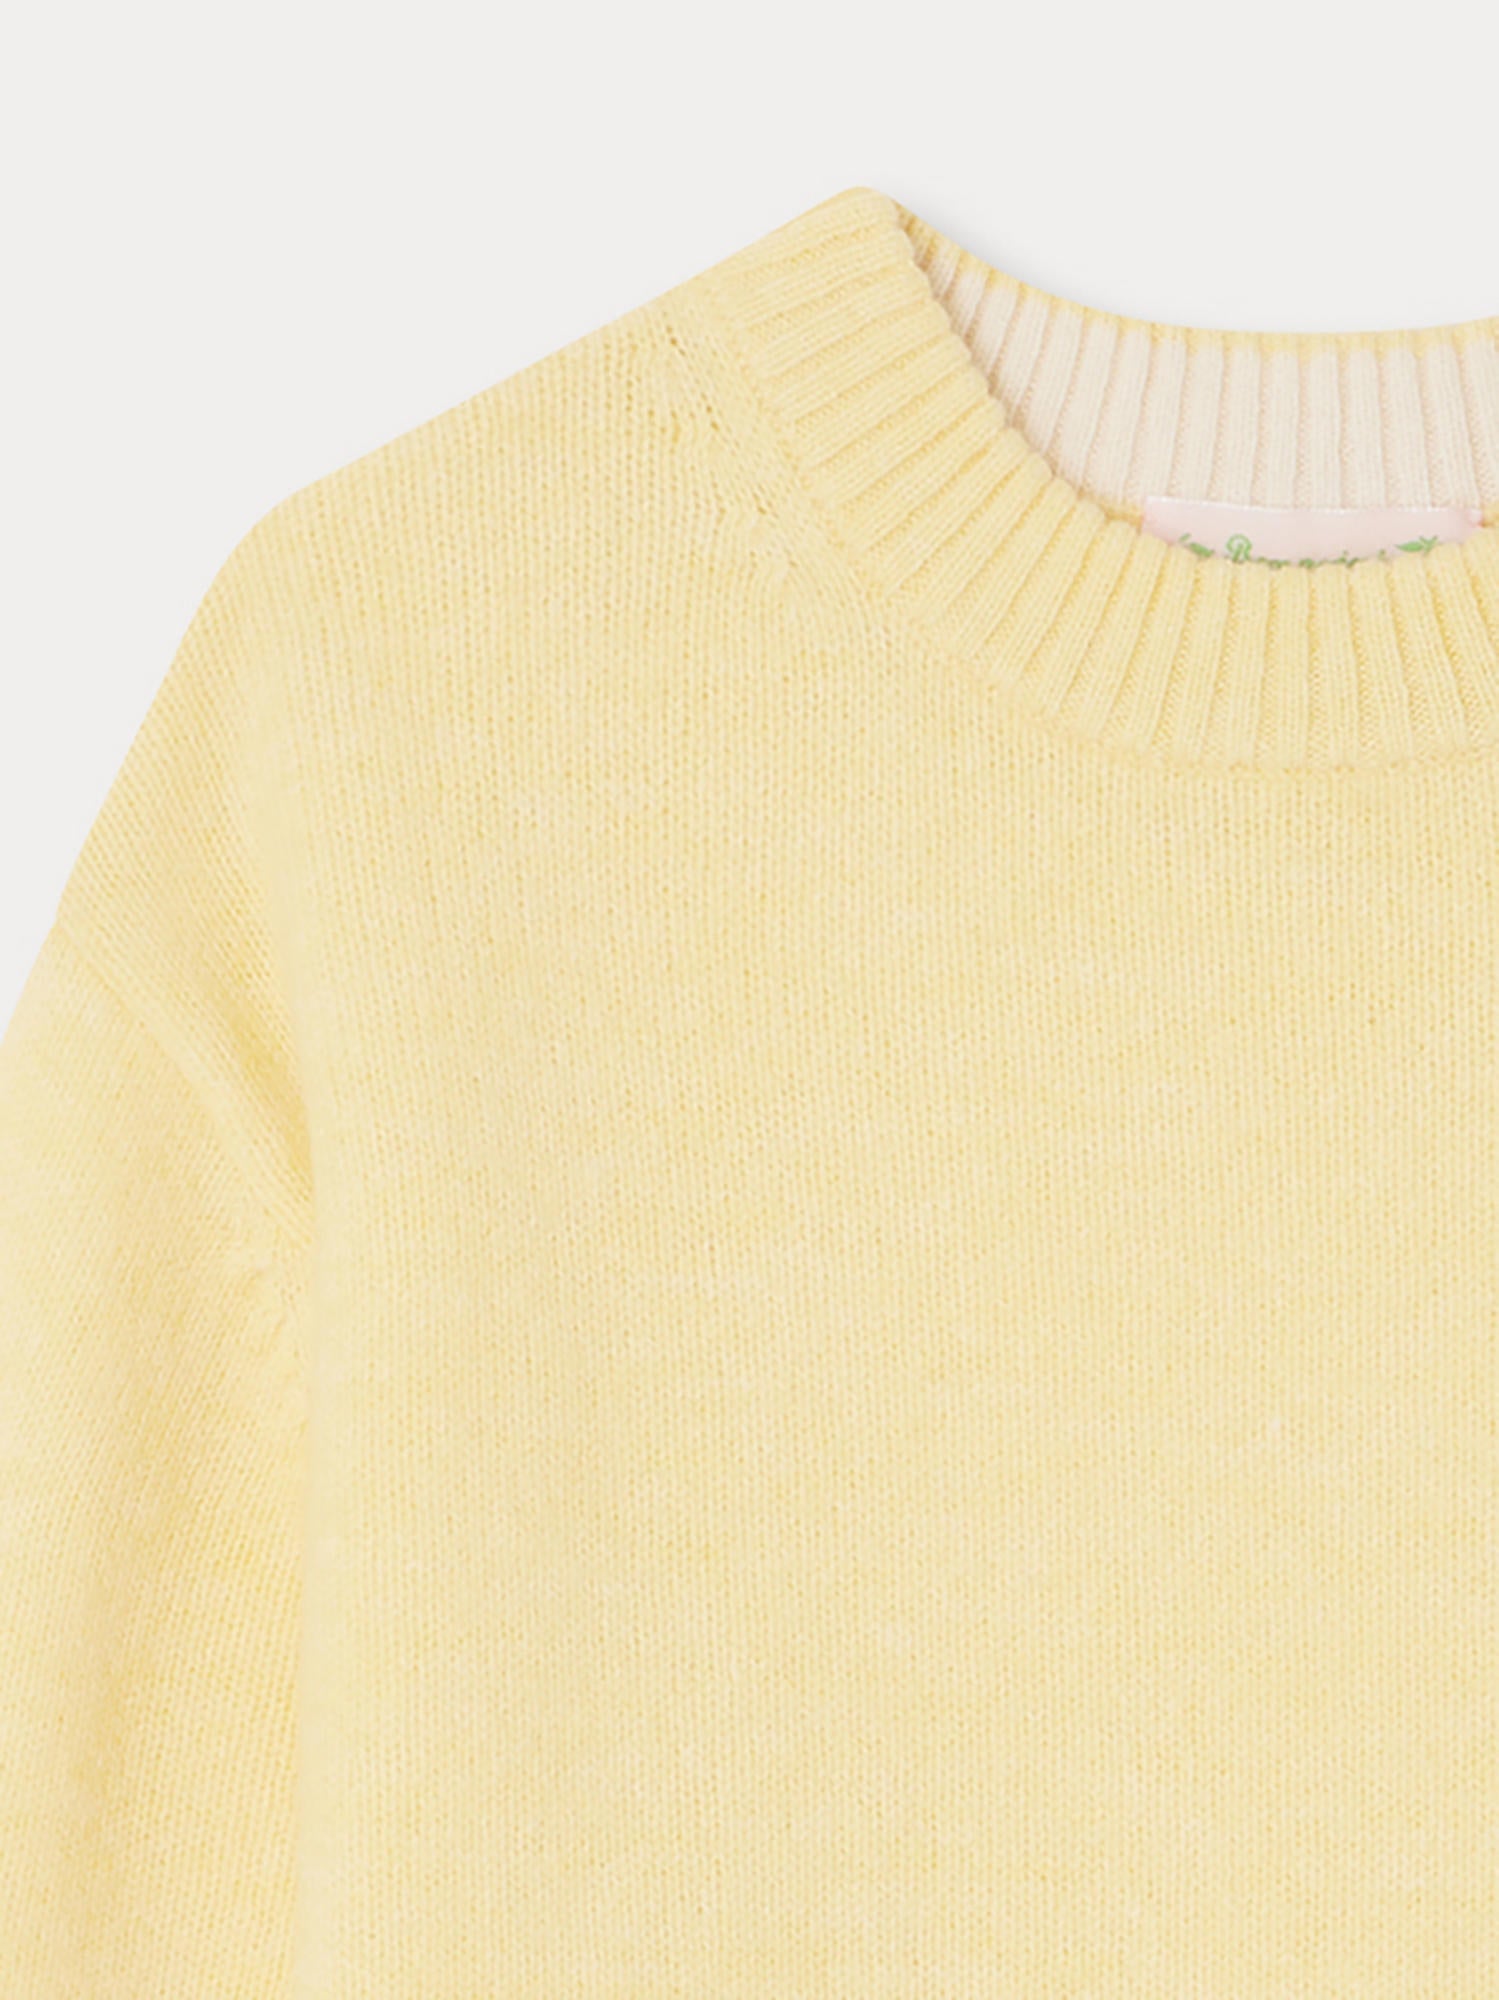 Girls Yellow Wool Sweater